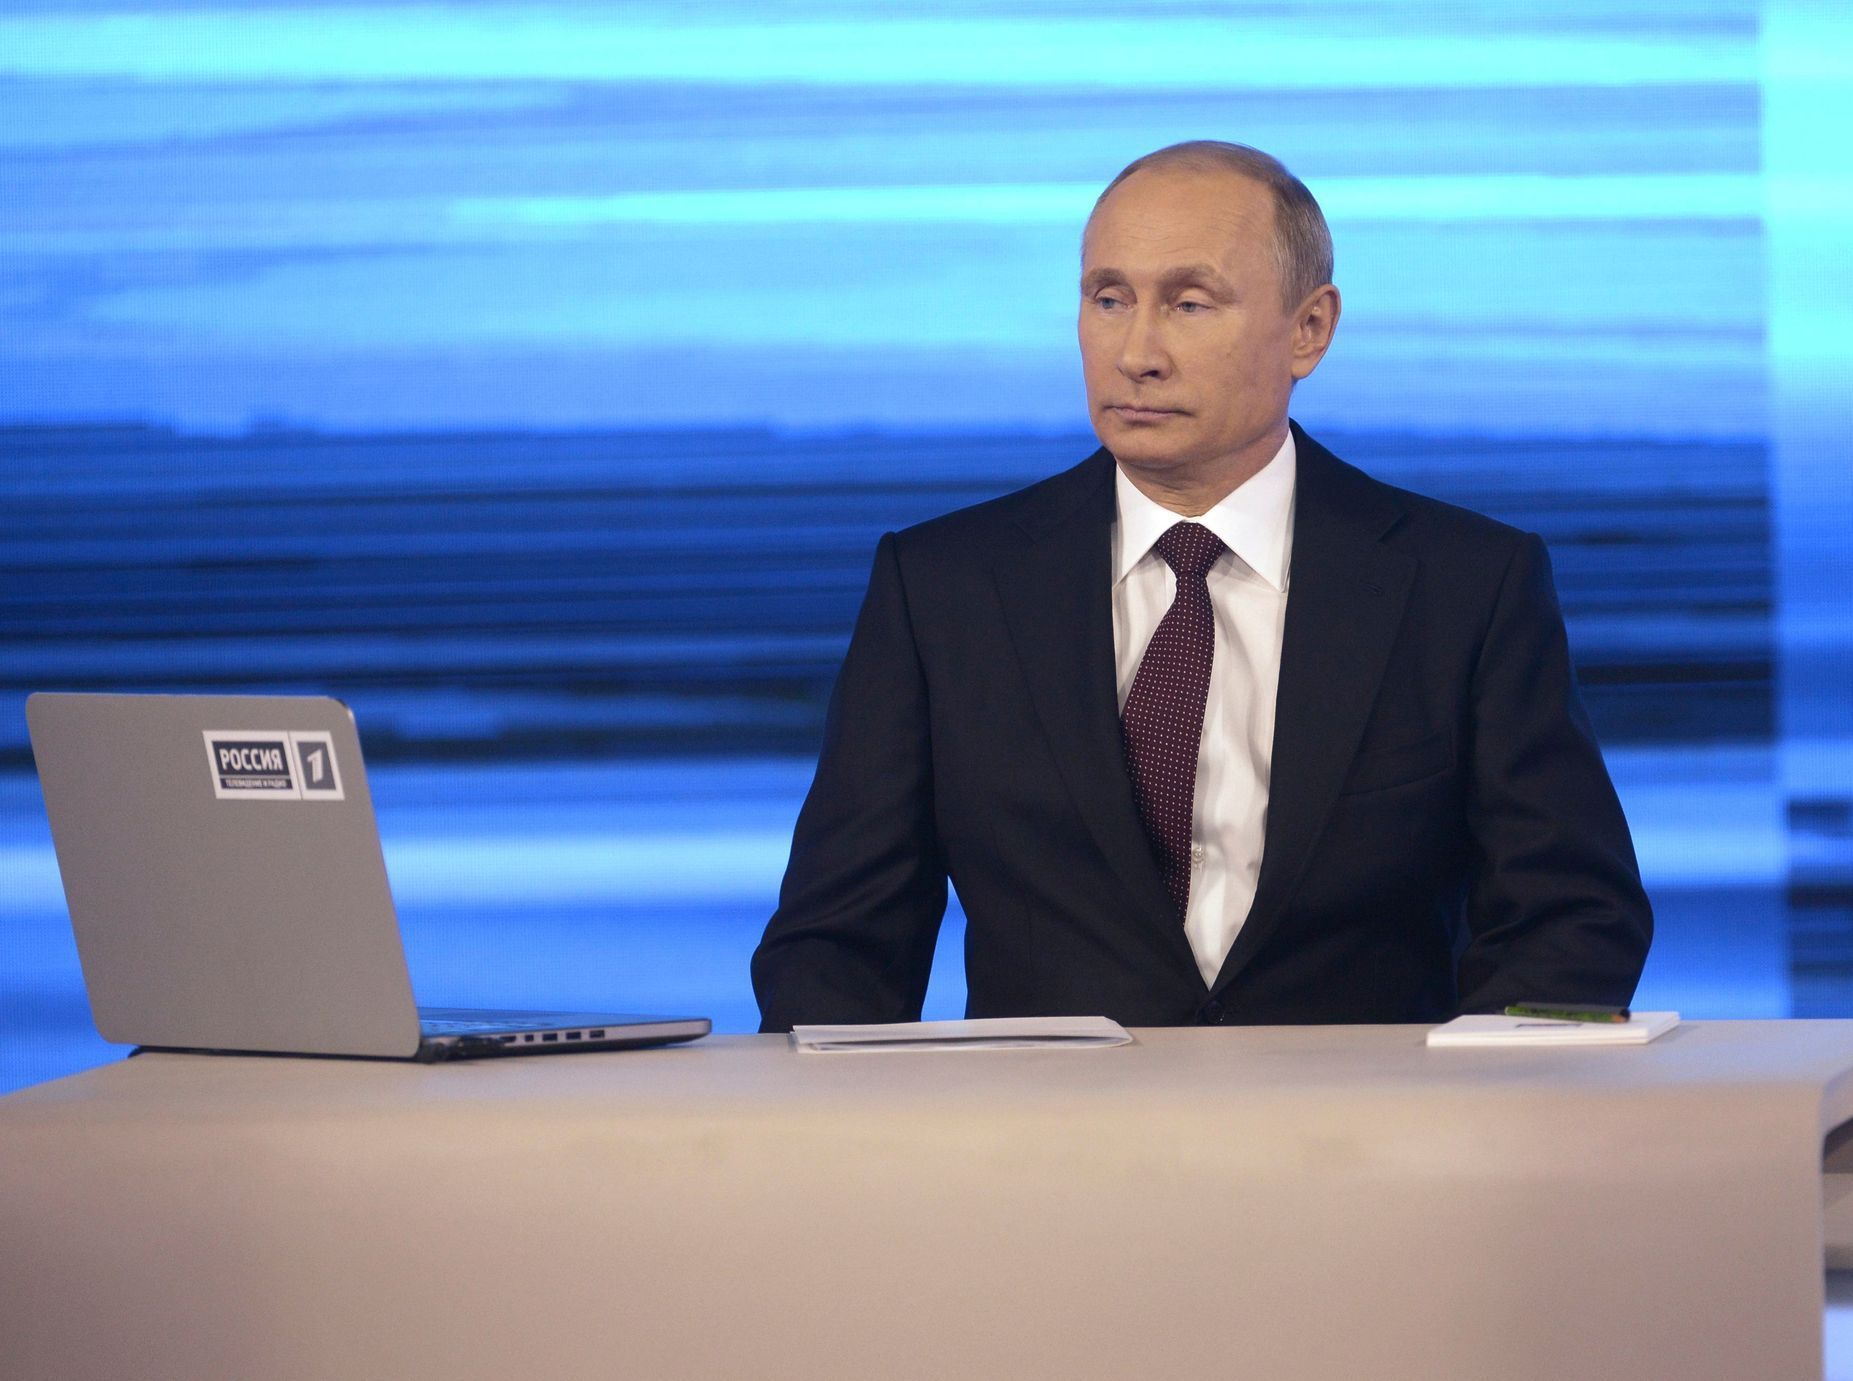 Vladimir Putin v živé televizní debatě (17. 4. 2014)